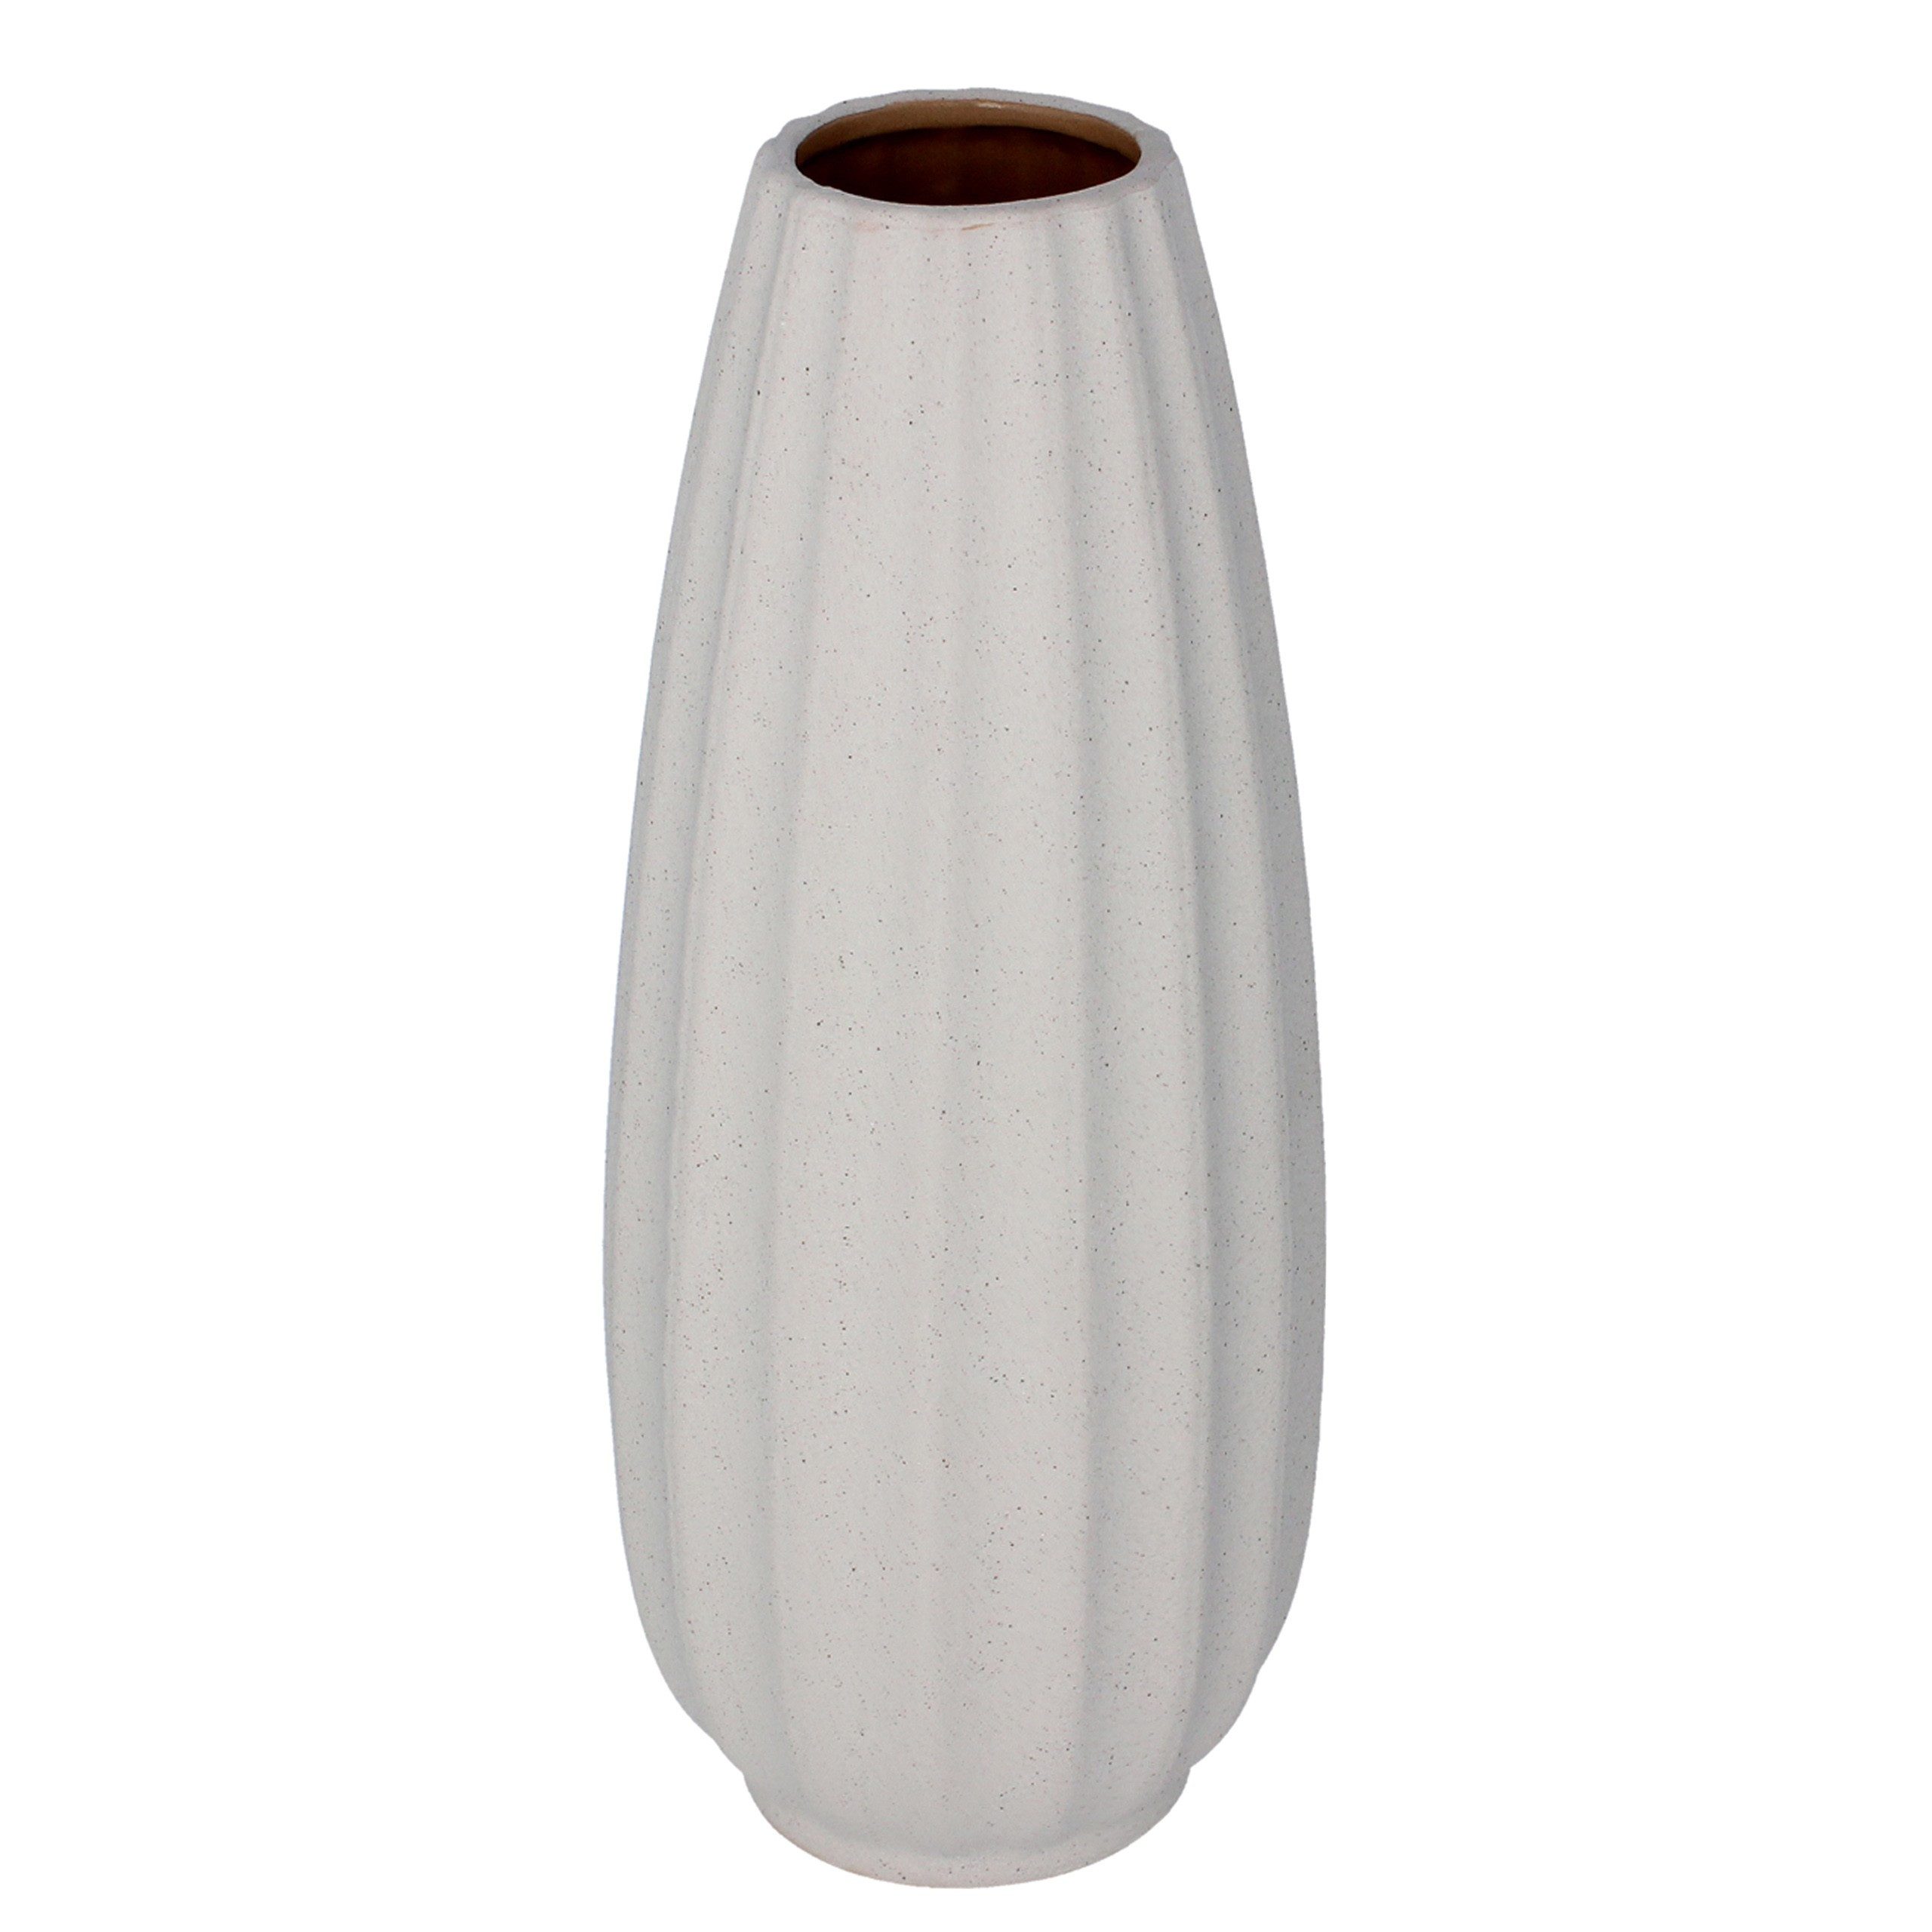 Sarcia.eu Dekovase Beige Keramikvase, hohe Blumenvase 12.5x12.5x32cm